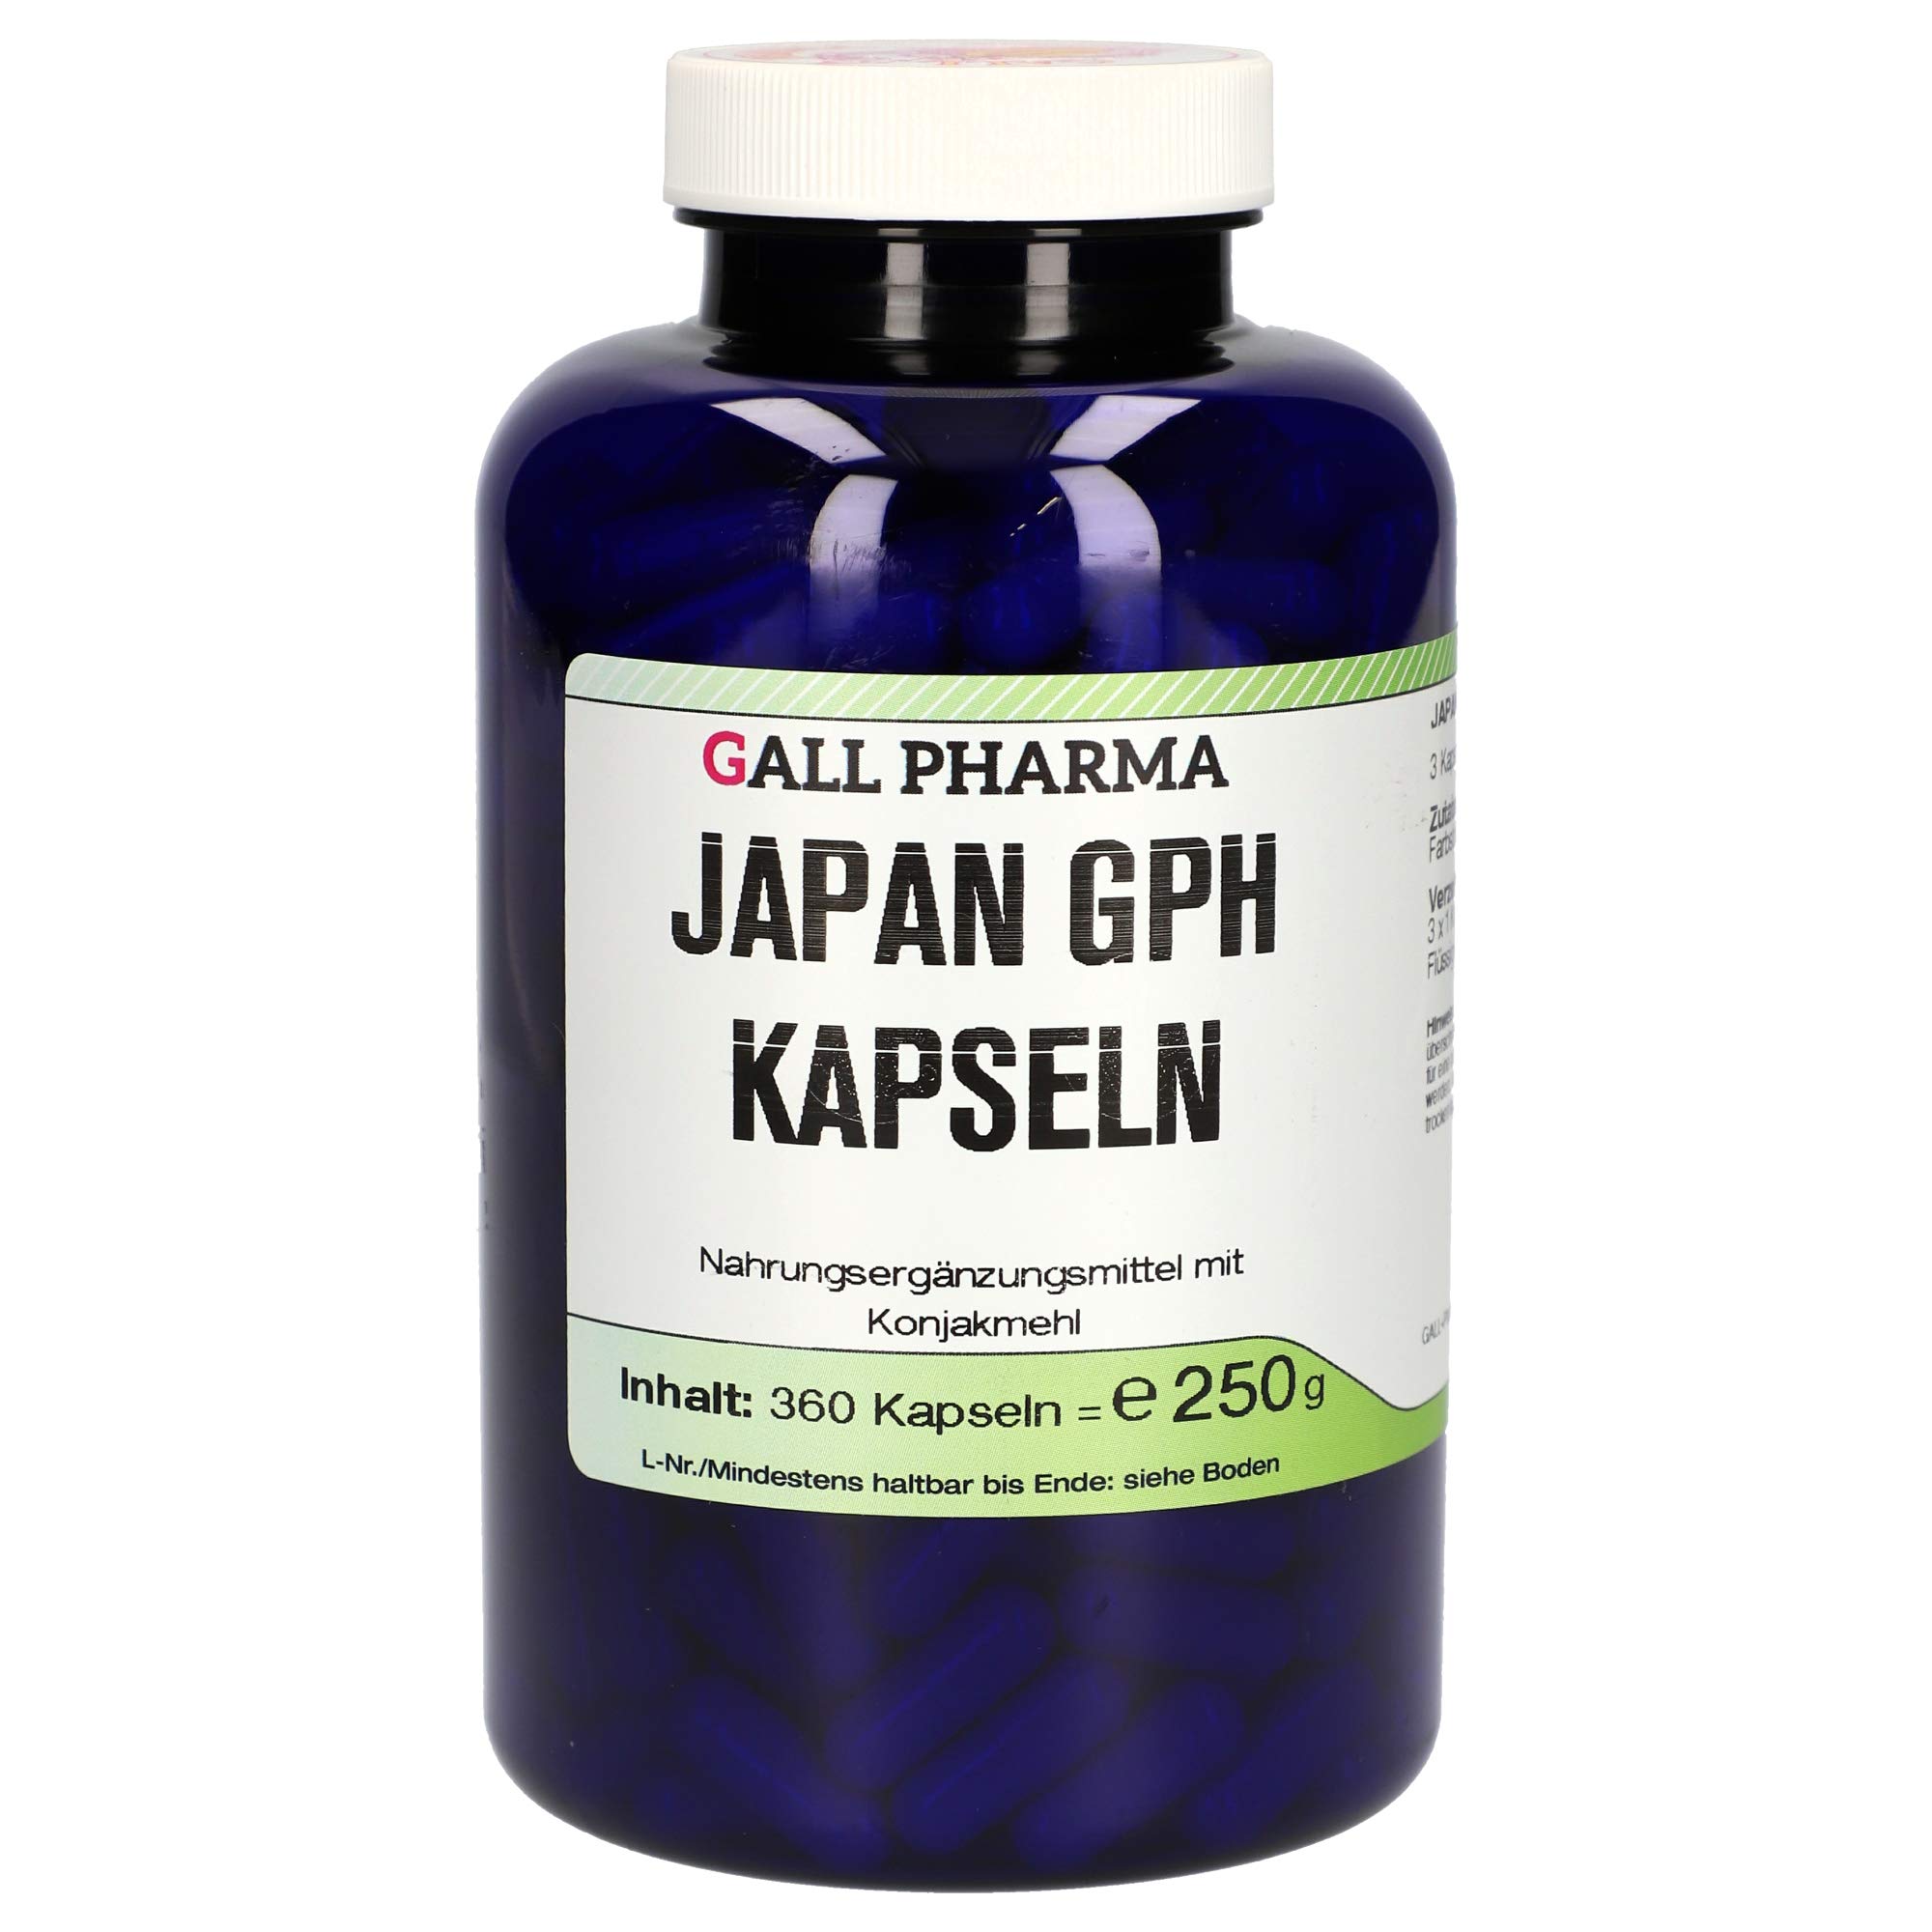 Gall Pharma Japan GPH Kapseln, 360 Kapseln